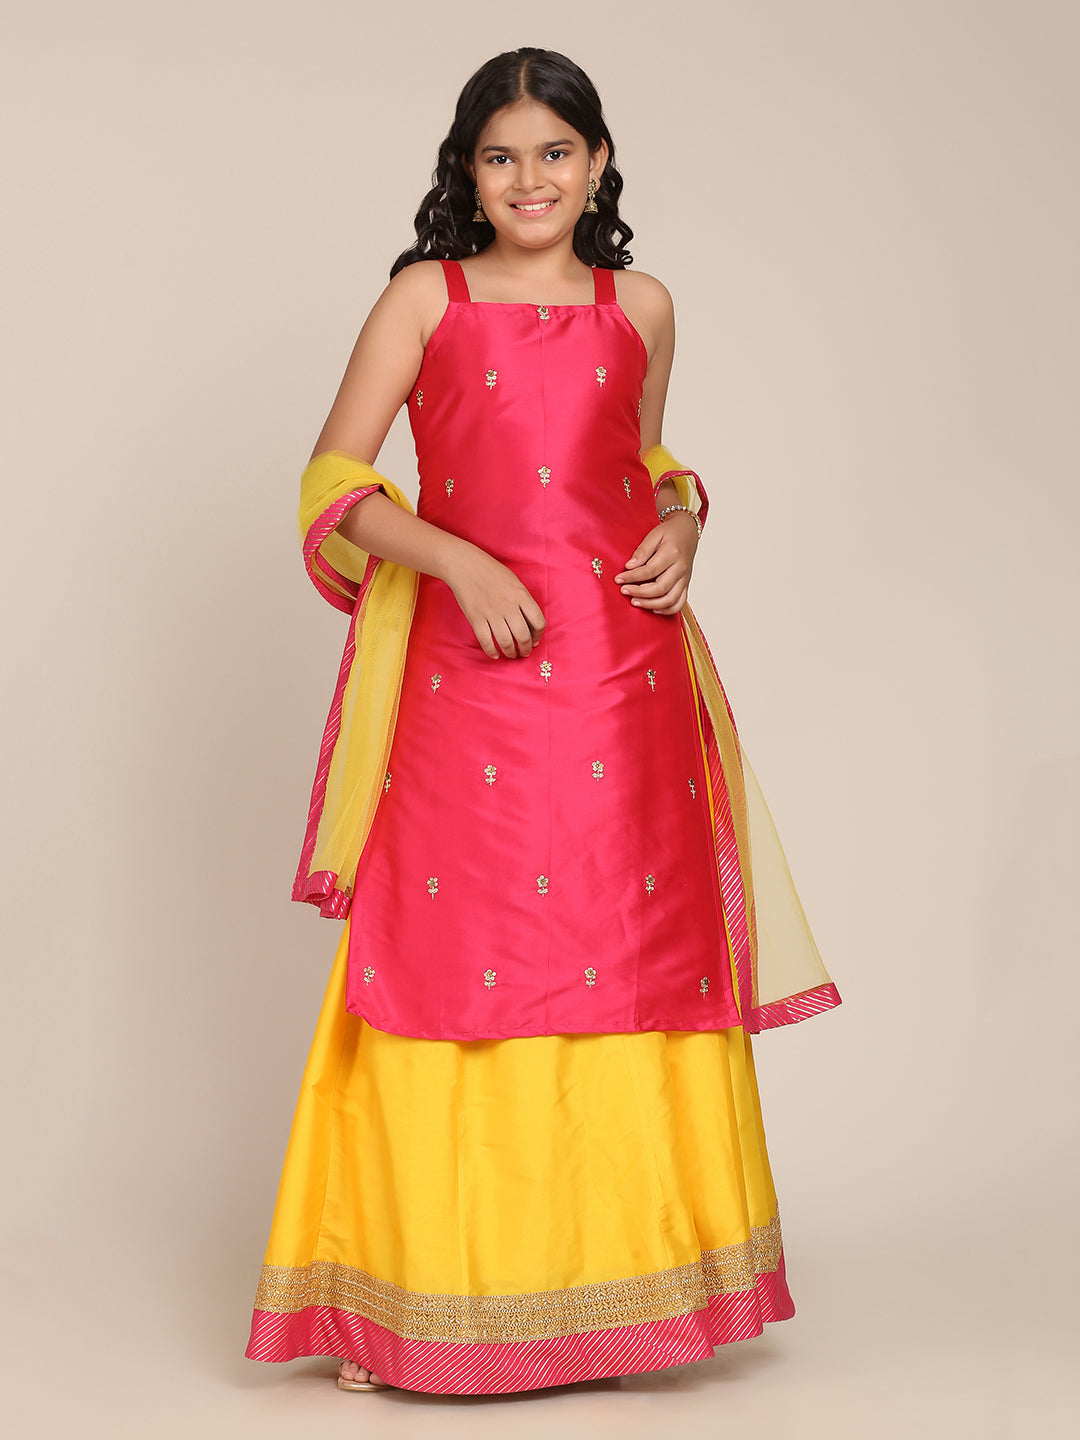 Girls Pink & Yellow Embroidered Ready To Wear Lehenga & Blouse With Dupatta - Bitiya By Bhama